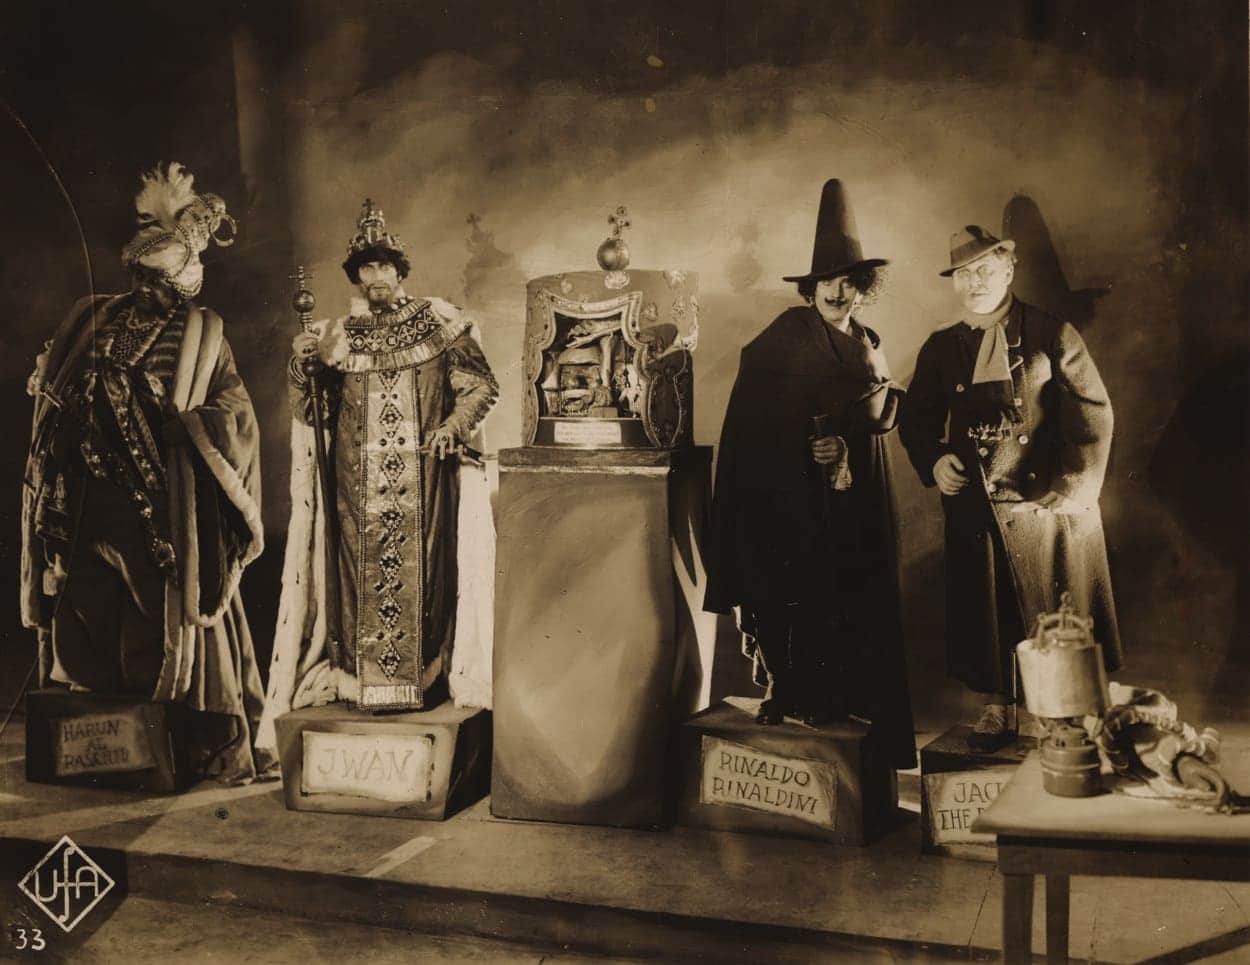 Harun Raschid, Ivan the Terrible, Rinaldo Rinaldini and Jack the Ripper